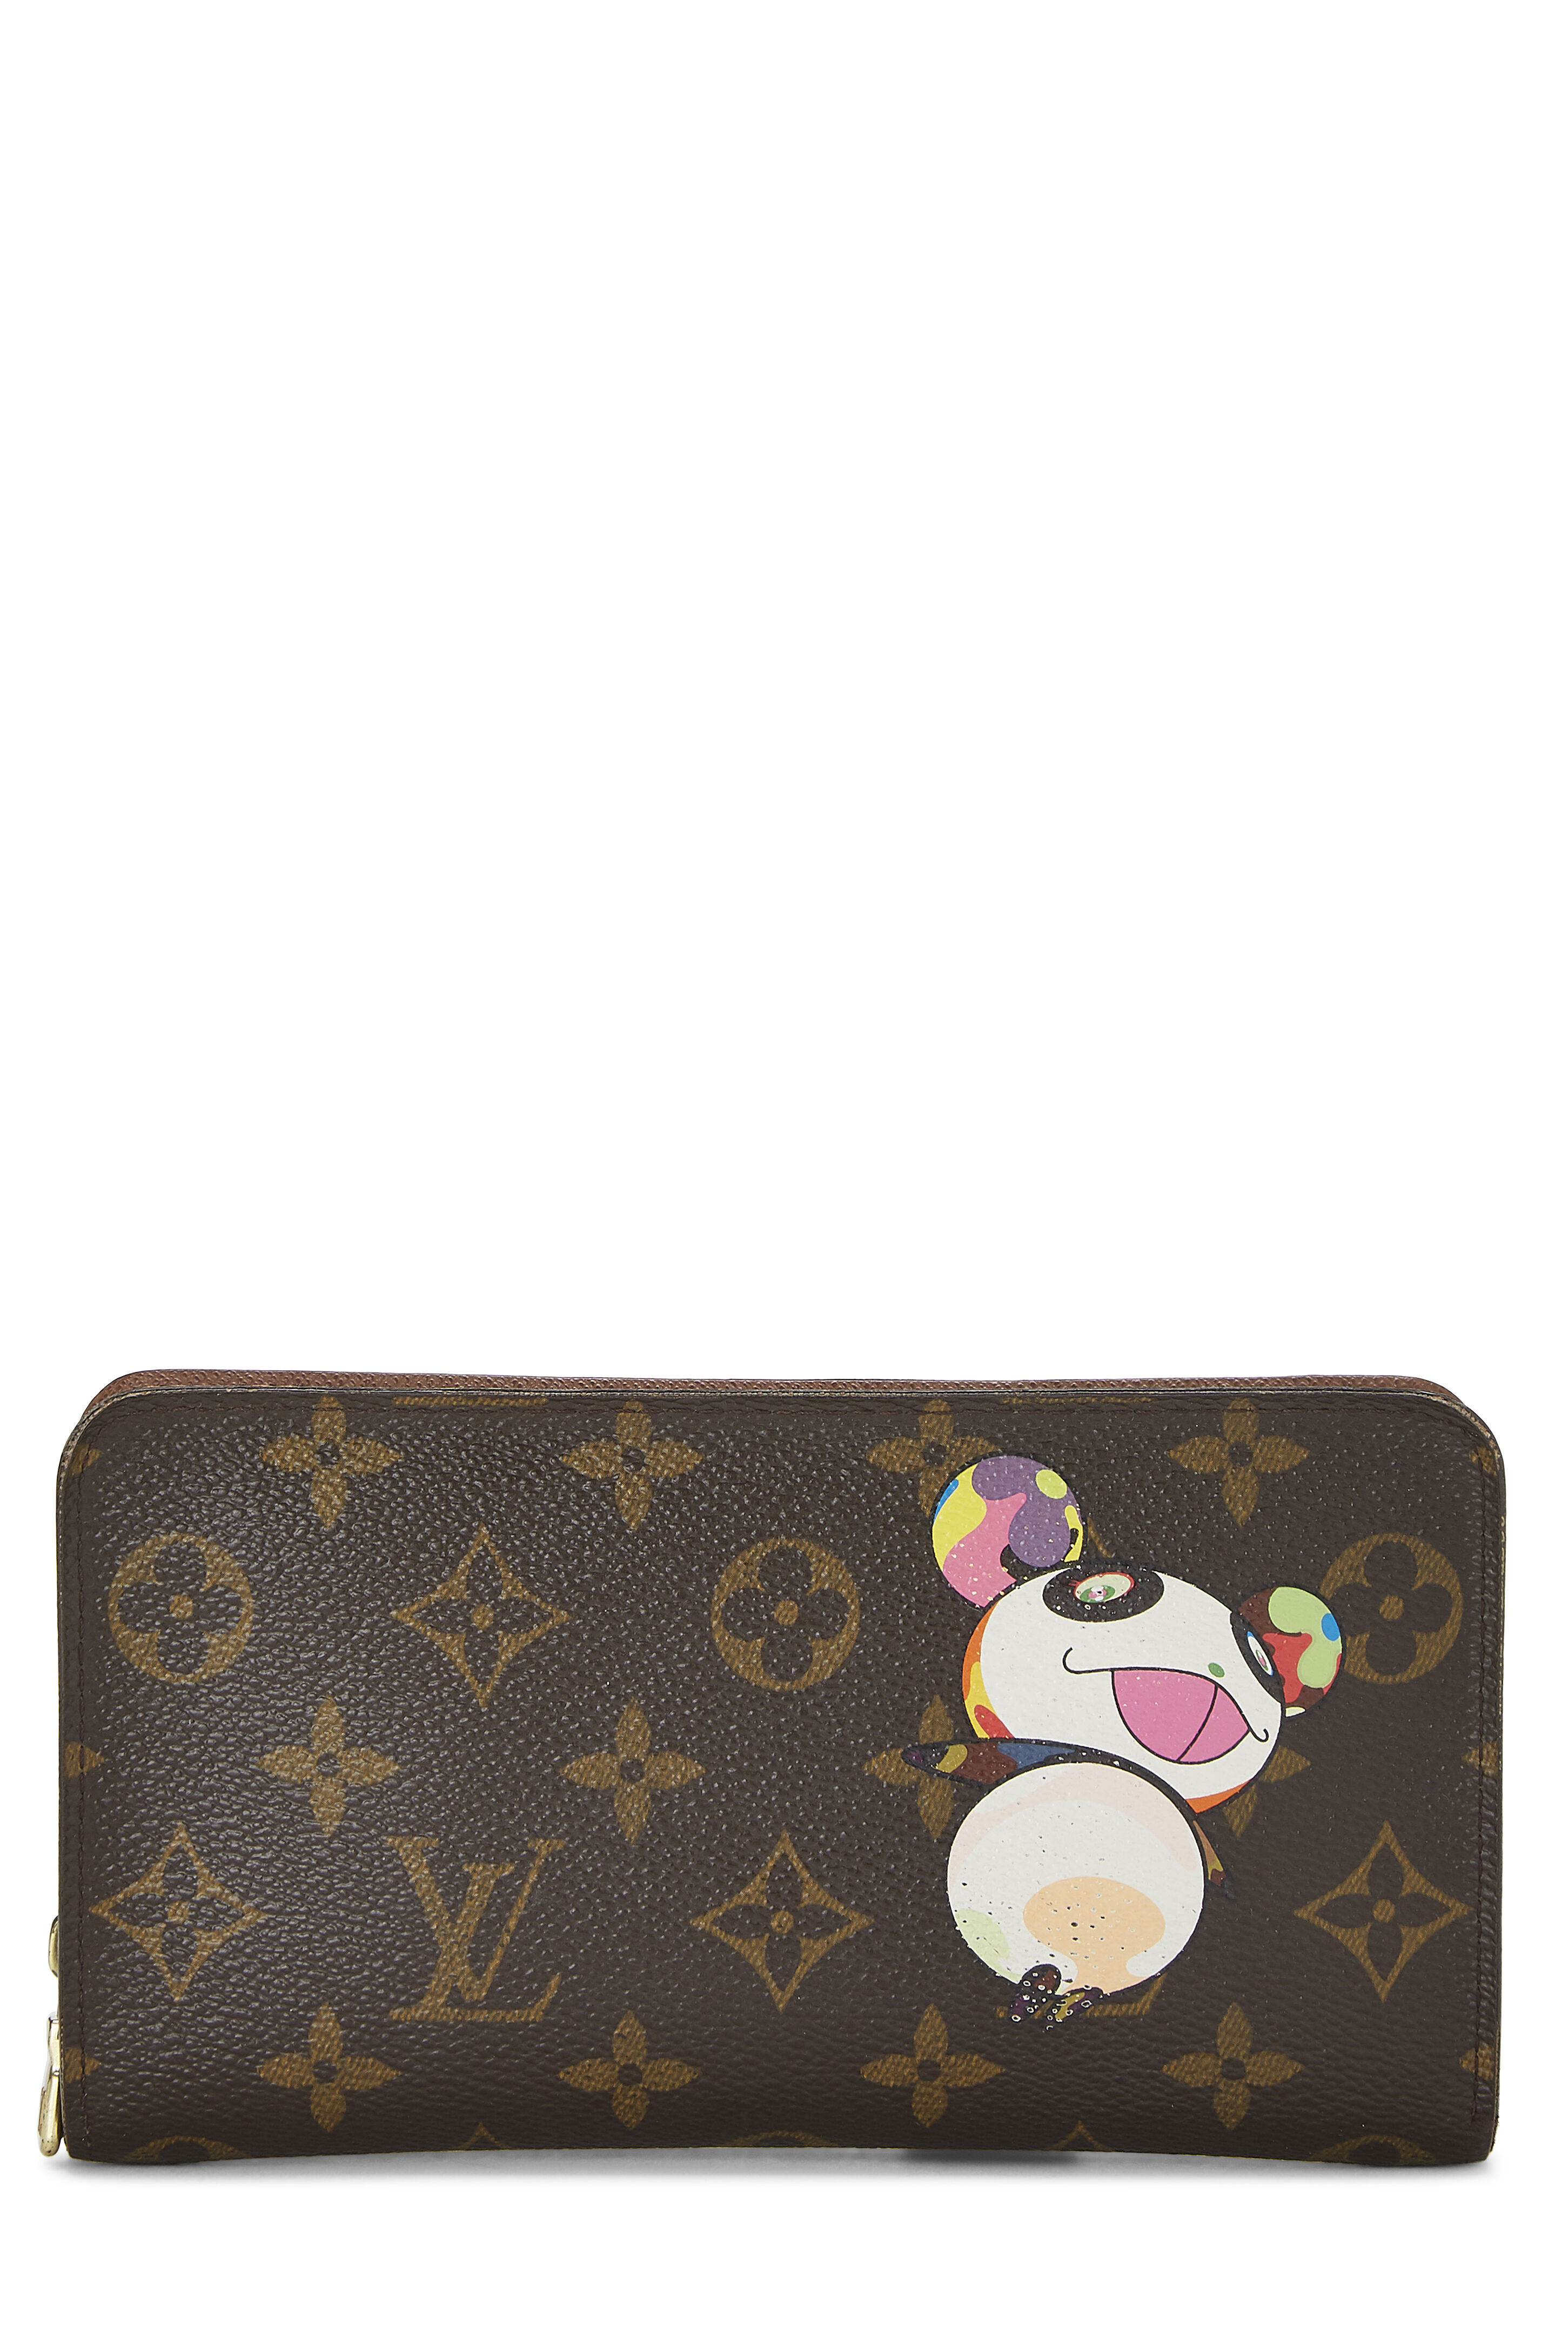 vuitton minnie mouse wallet